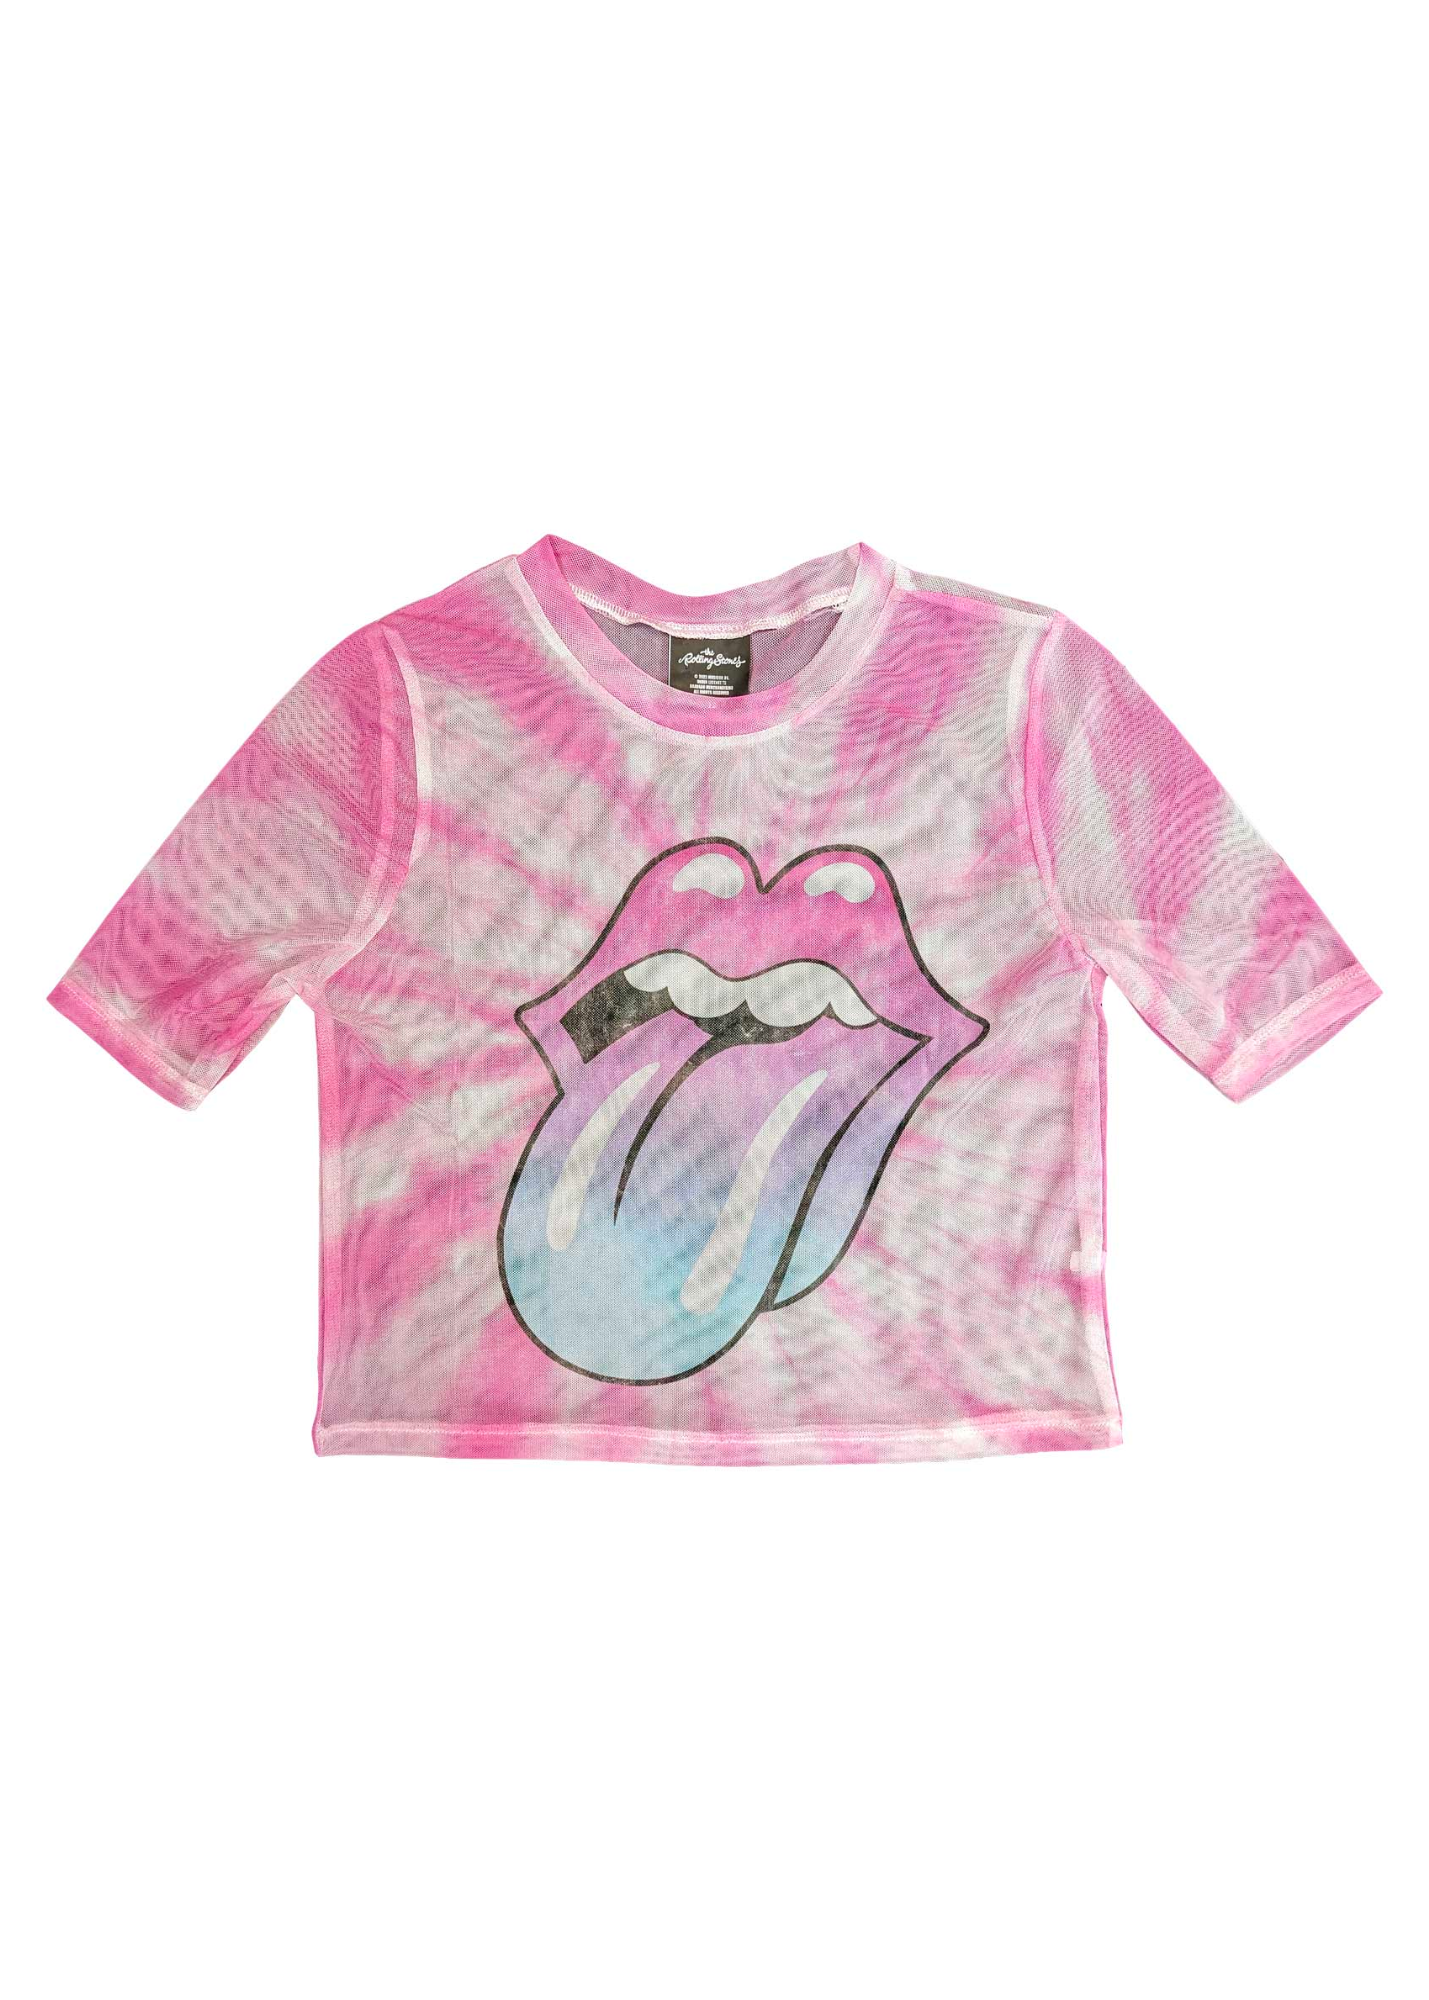 Thunder Egg Edit - Pink Tie Dye Mesh Rolling Stones Hot Lips Crop Top